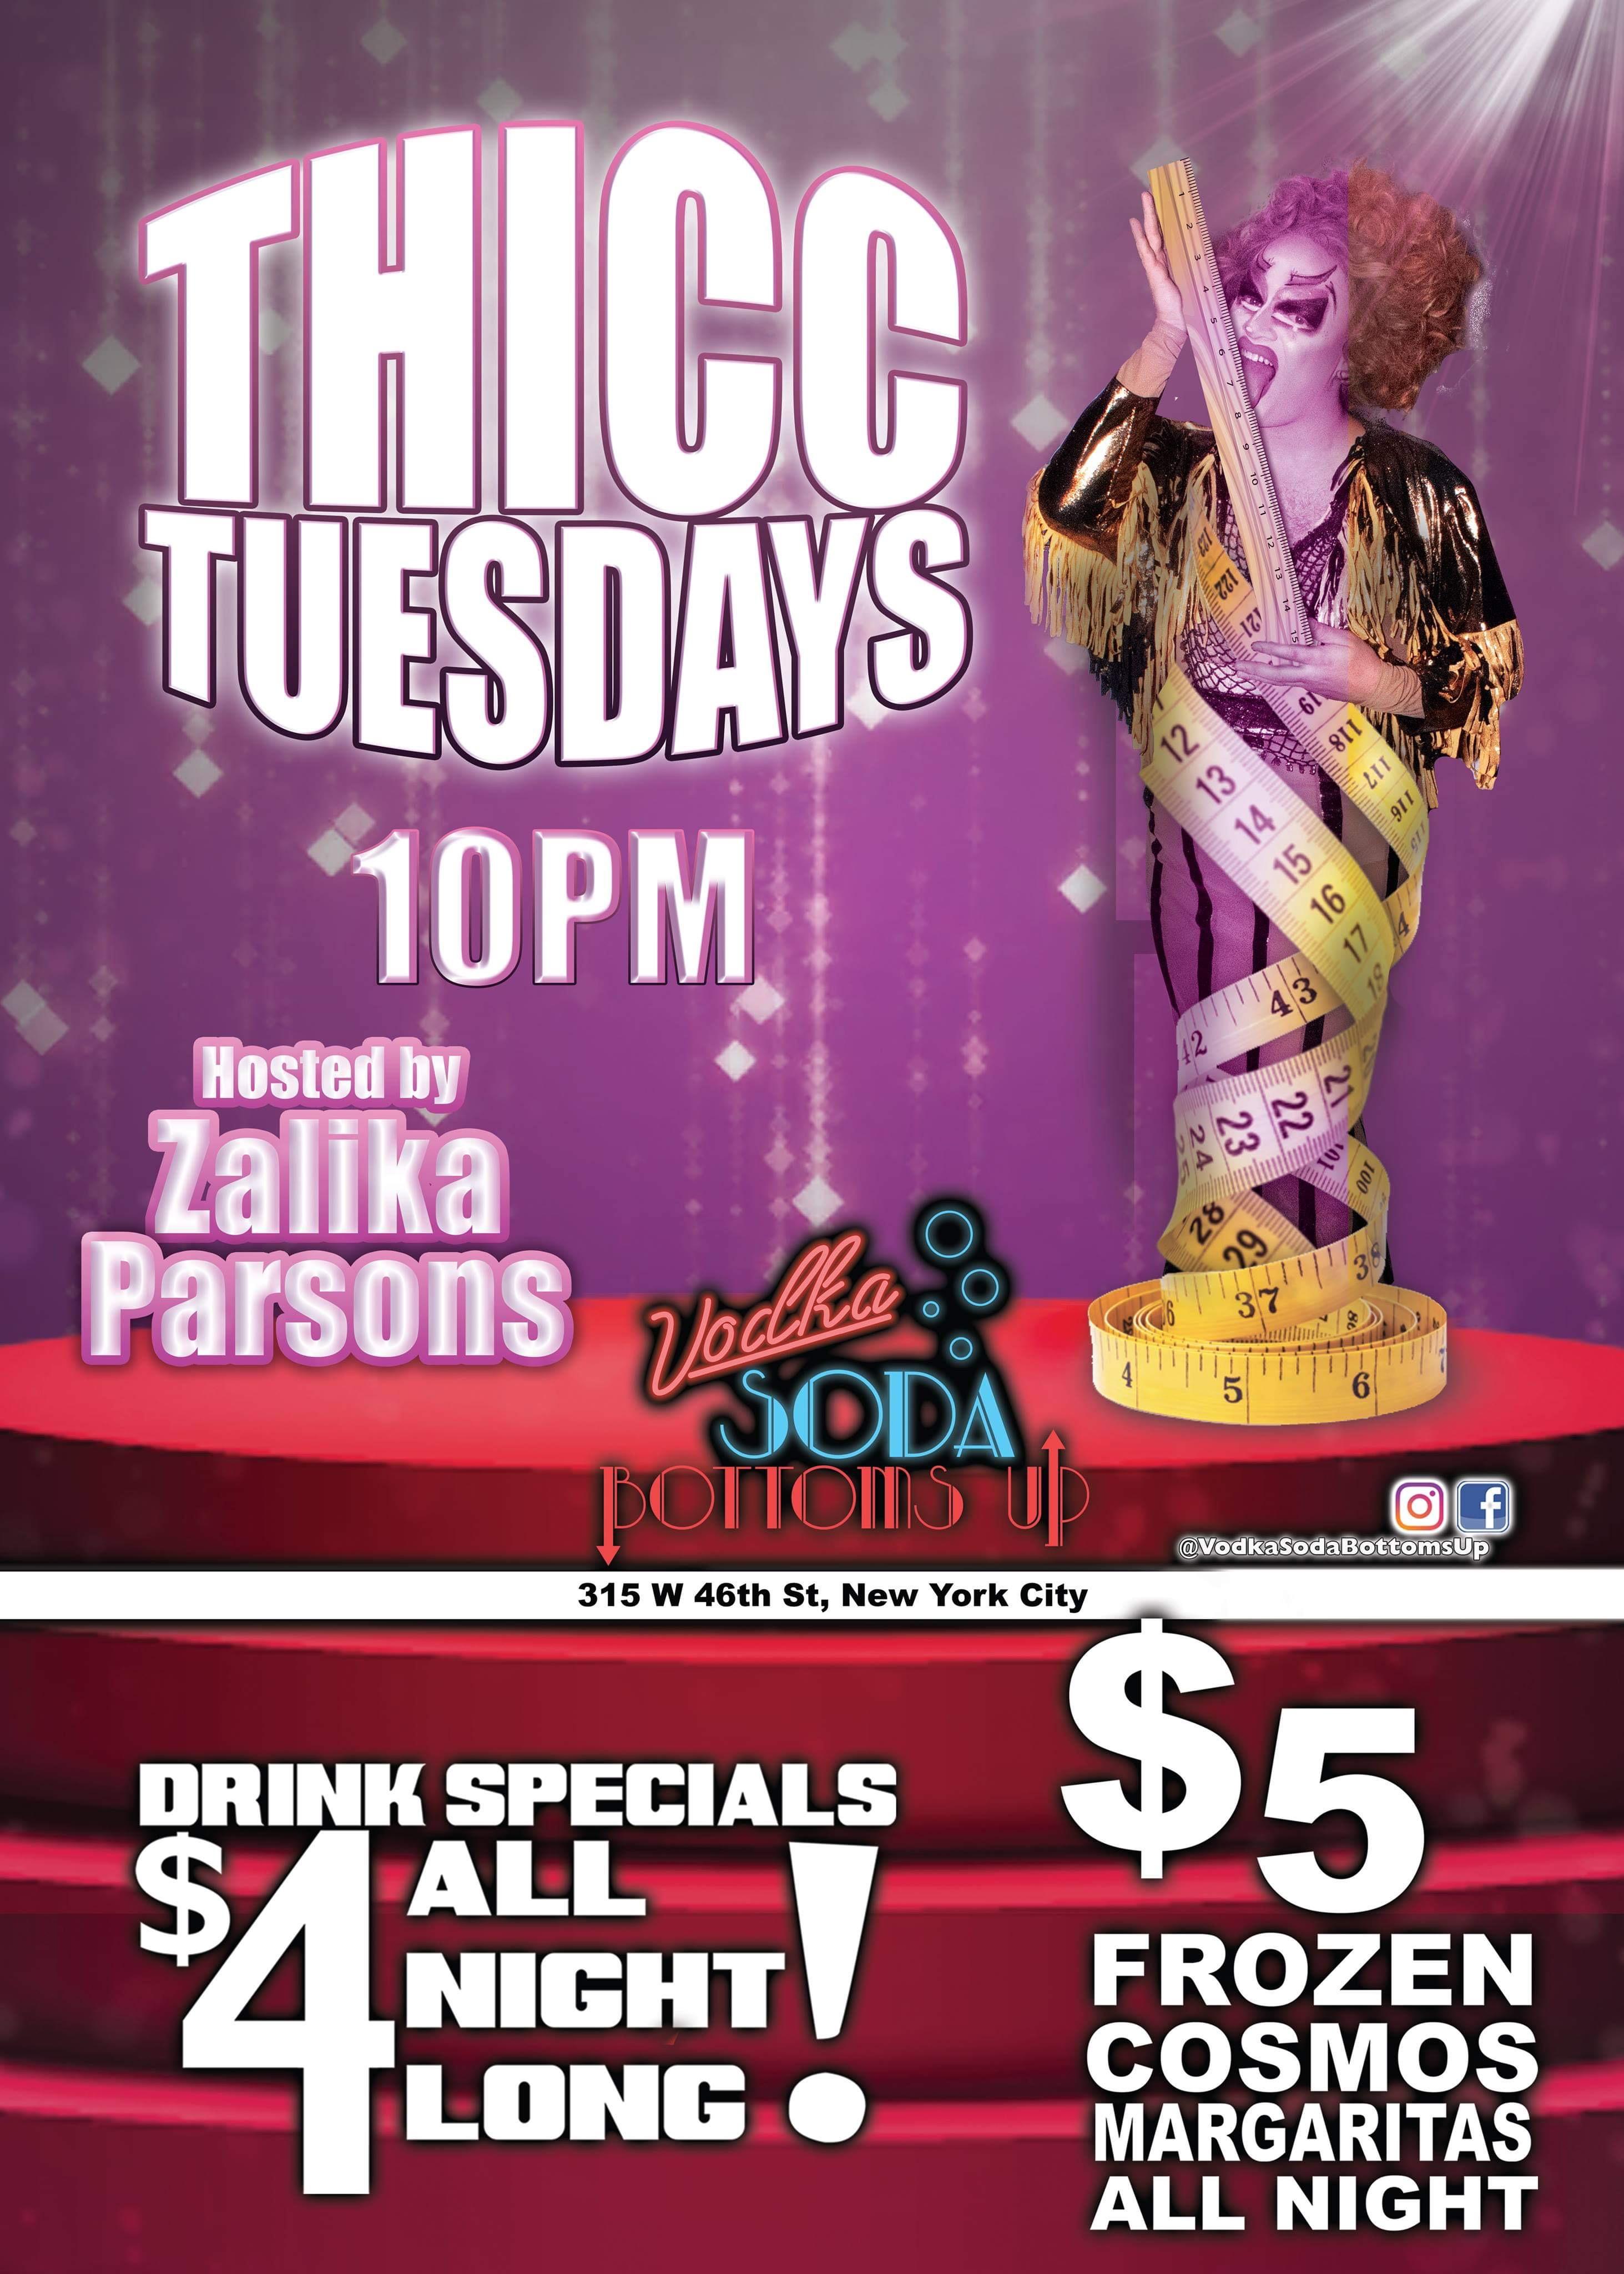 Thicc Tuesdays! A Free Drag Show